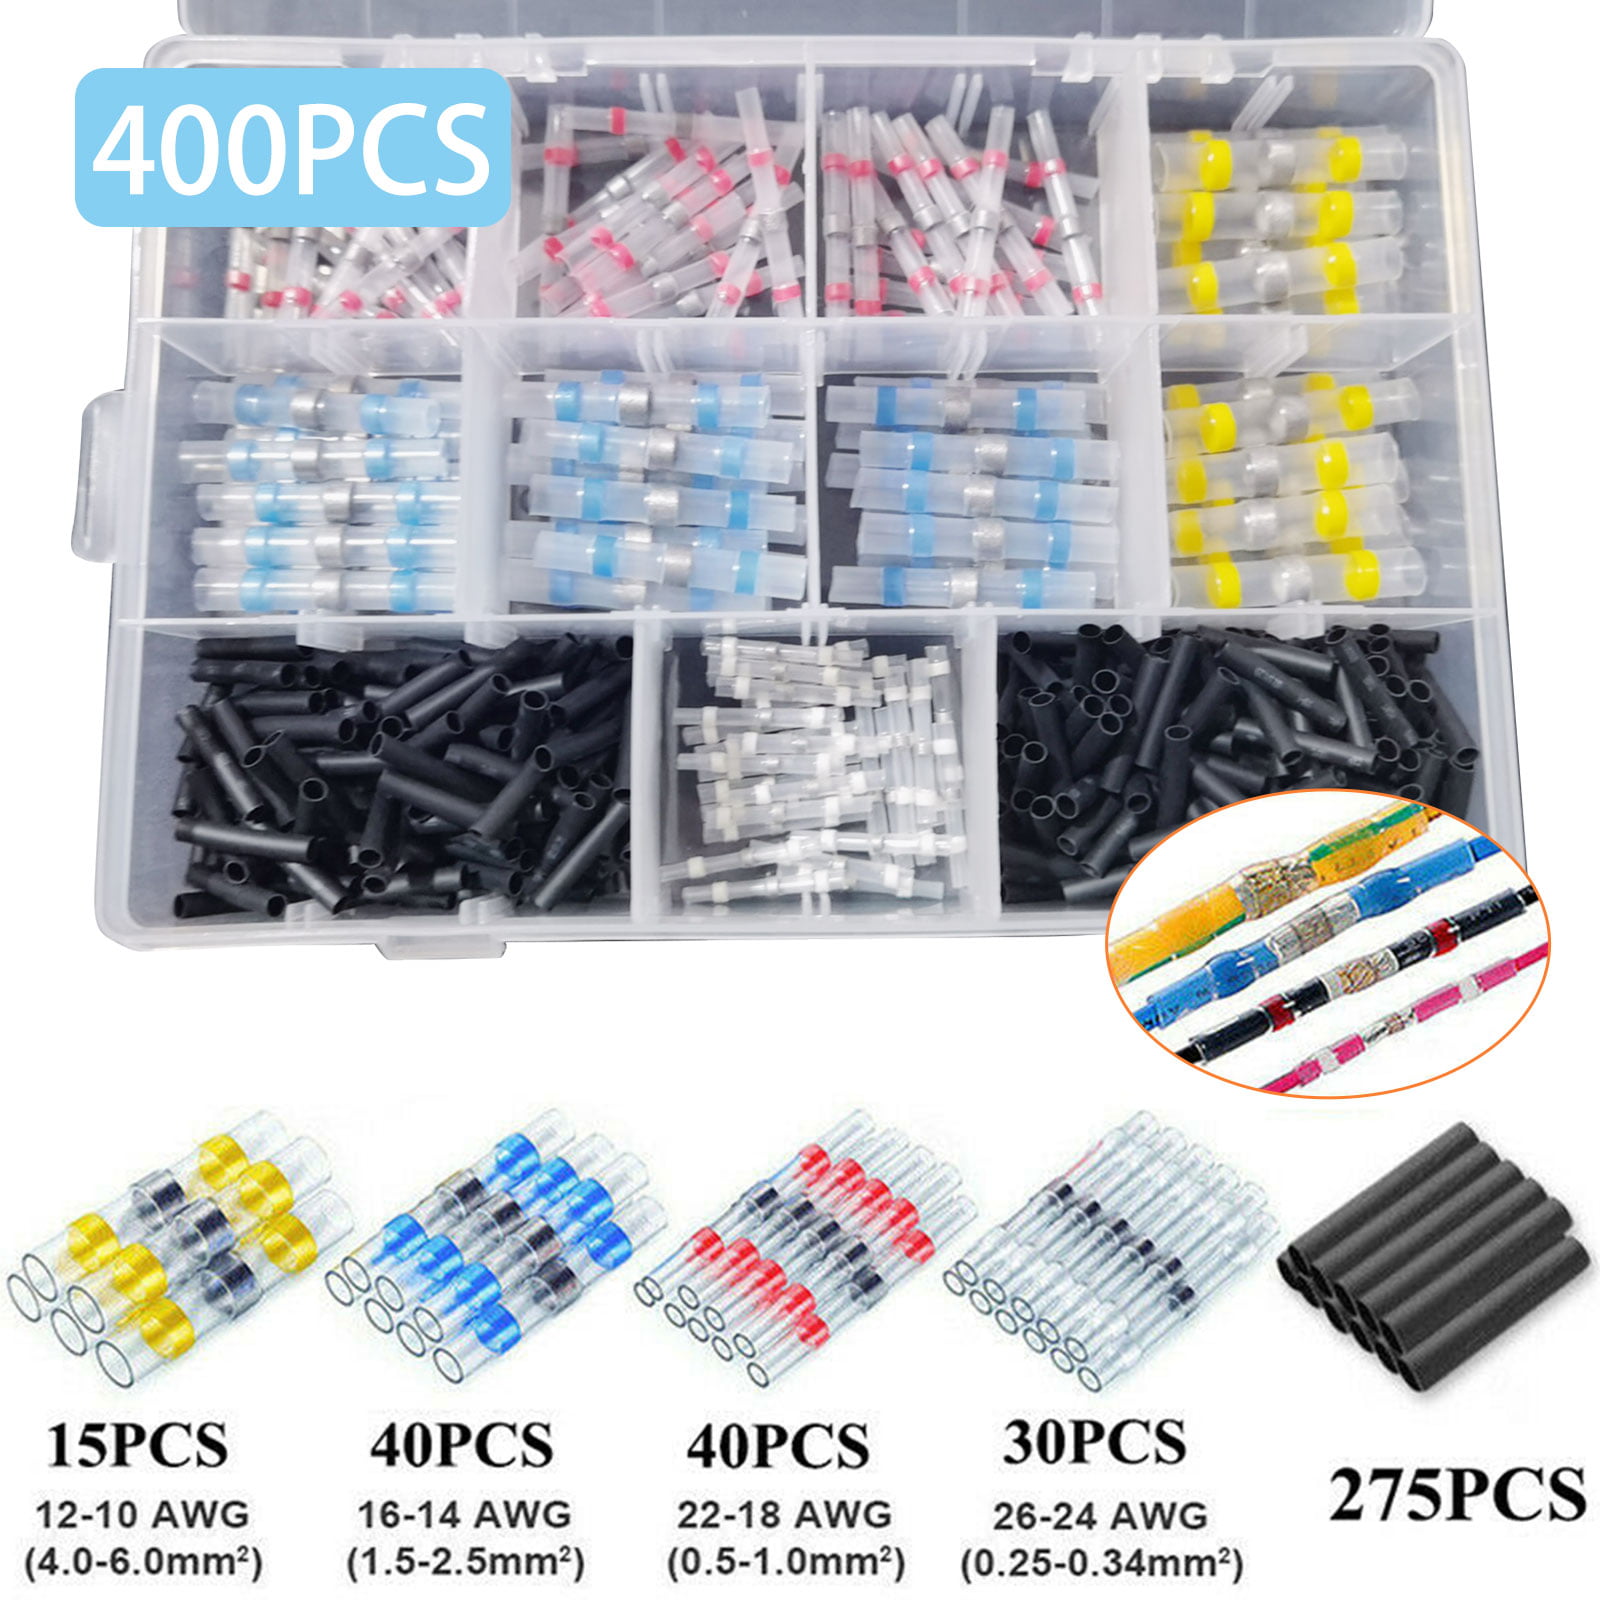 200PCS Heat Shrink Wire TerminalS ConnectorS Waterproof Solder Sleeve Set Kit US 